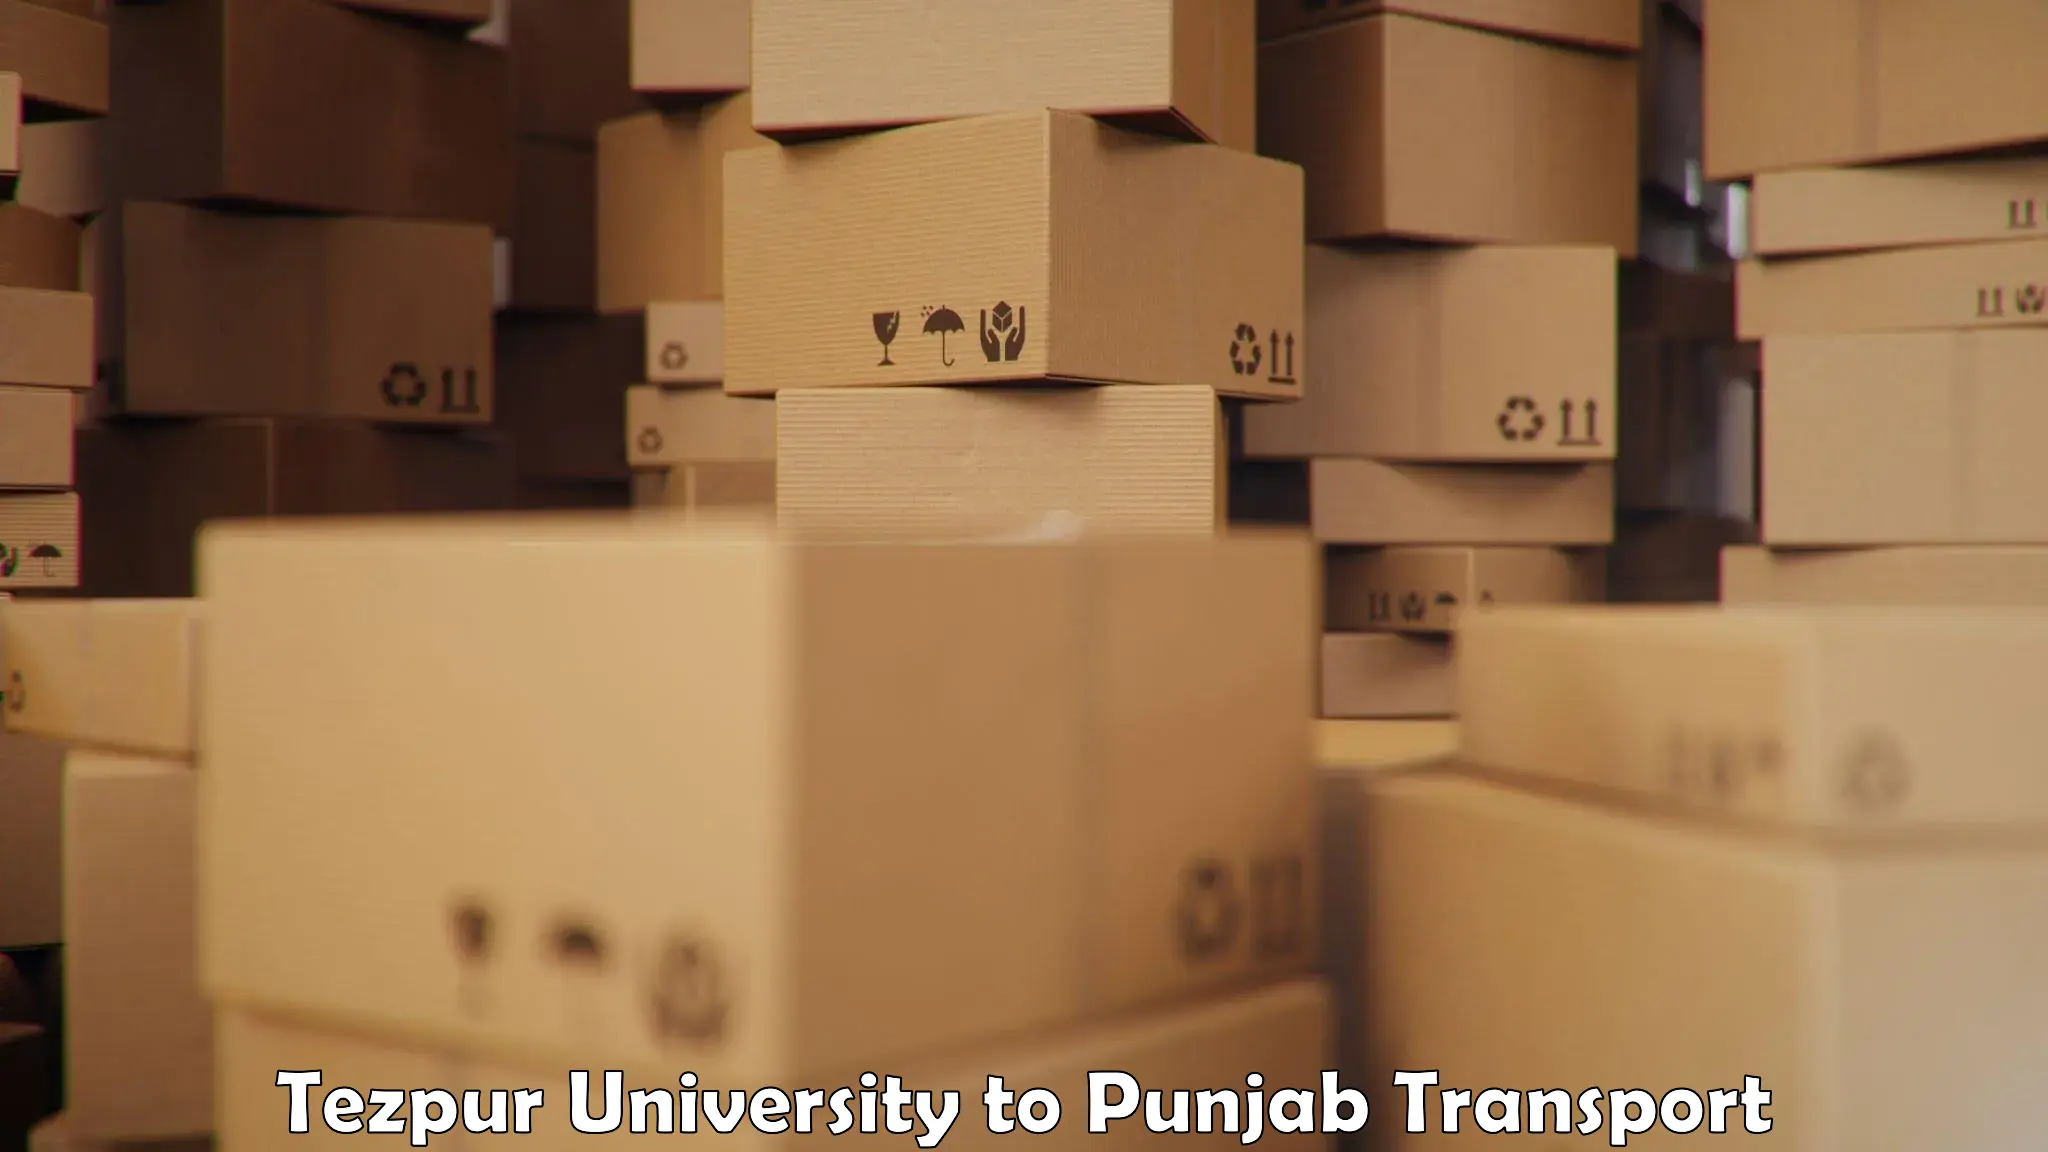 Shipping partner Tezpur University to Punjab